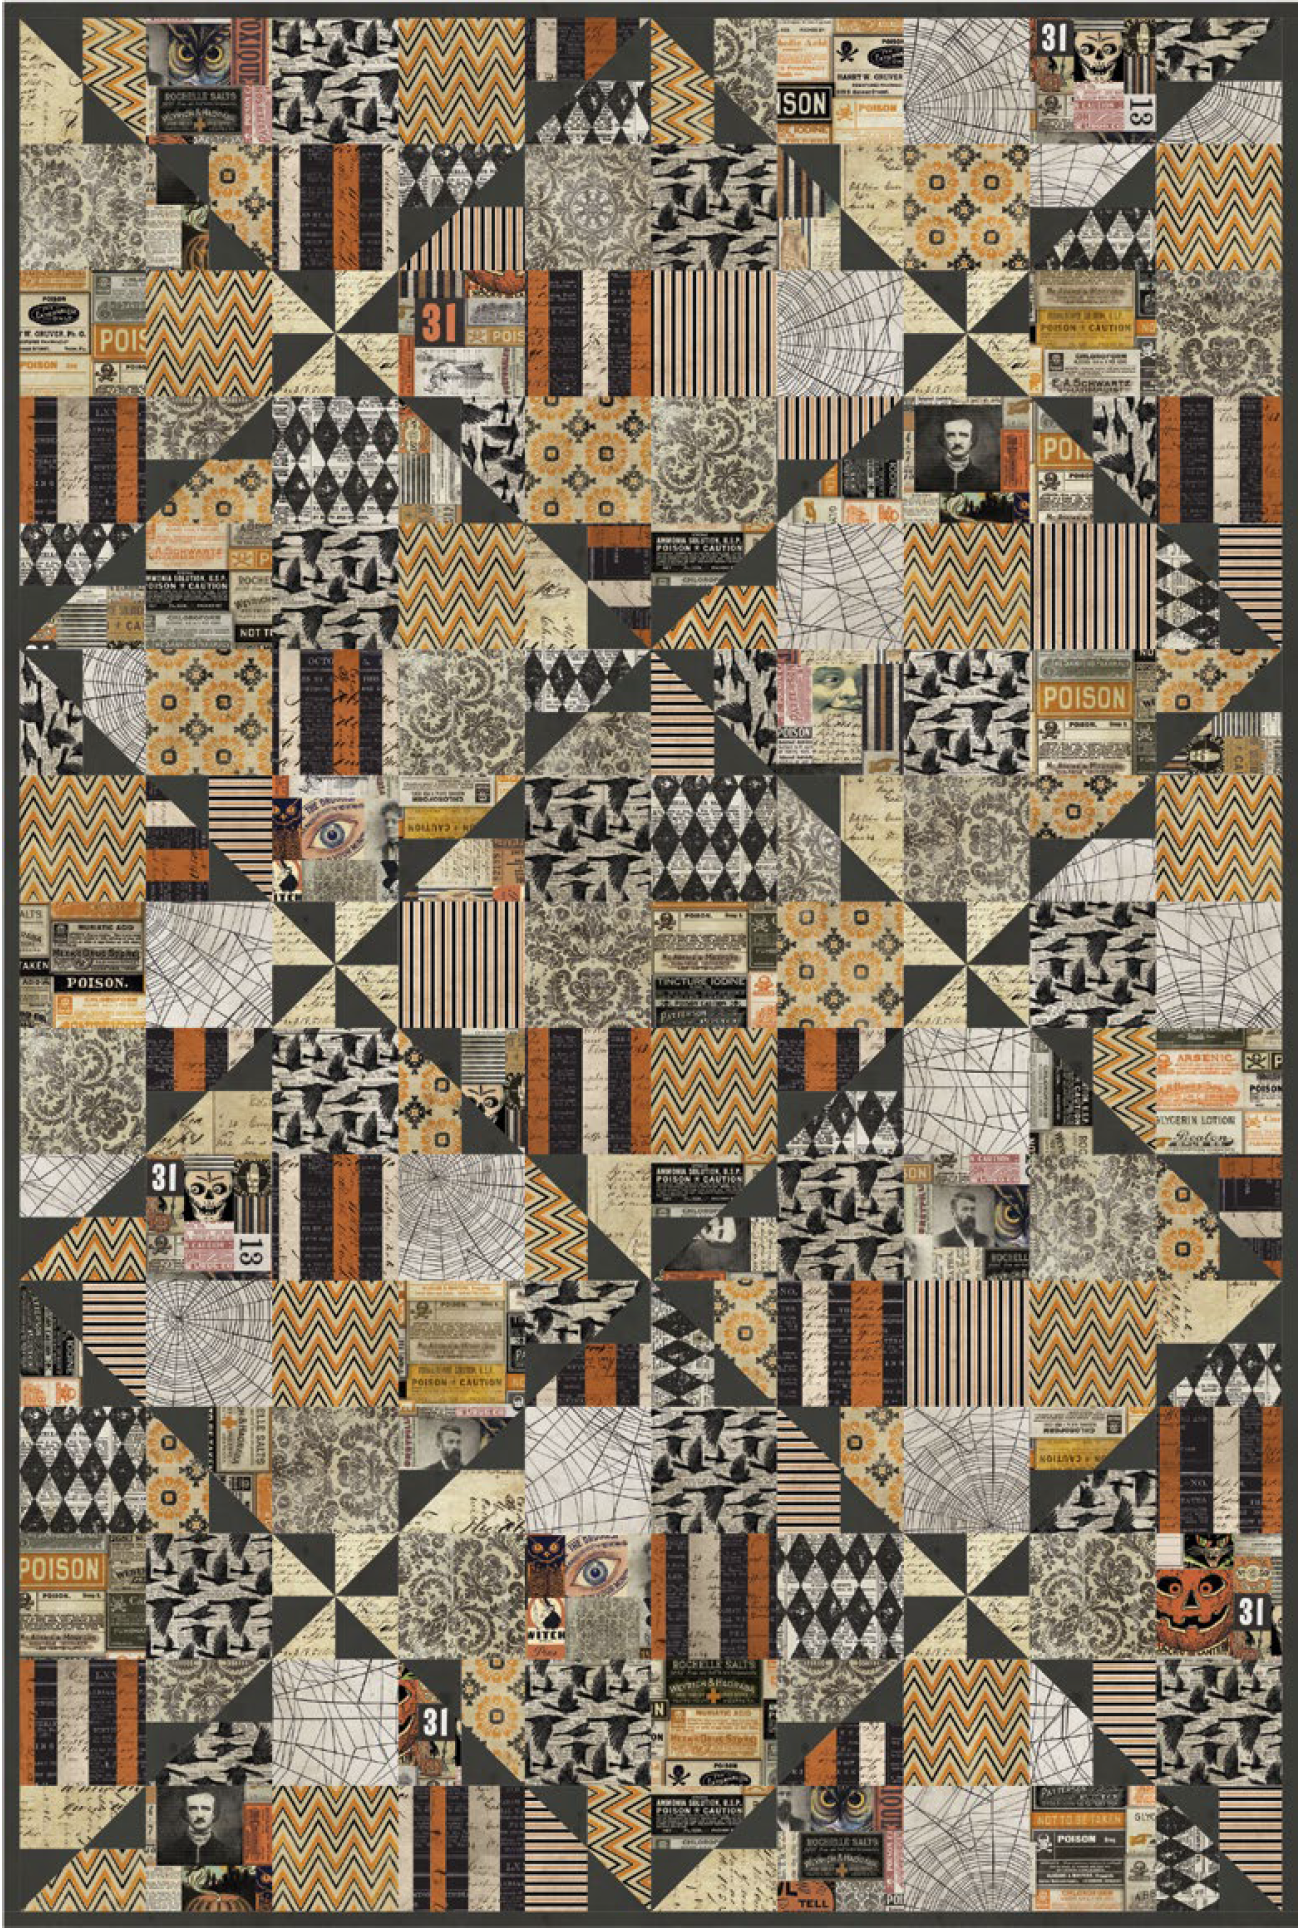 Free Pattern - Tim Holtz - Illusions quilt pattern by Freespirit